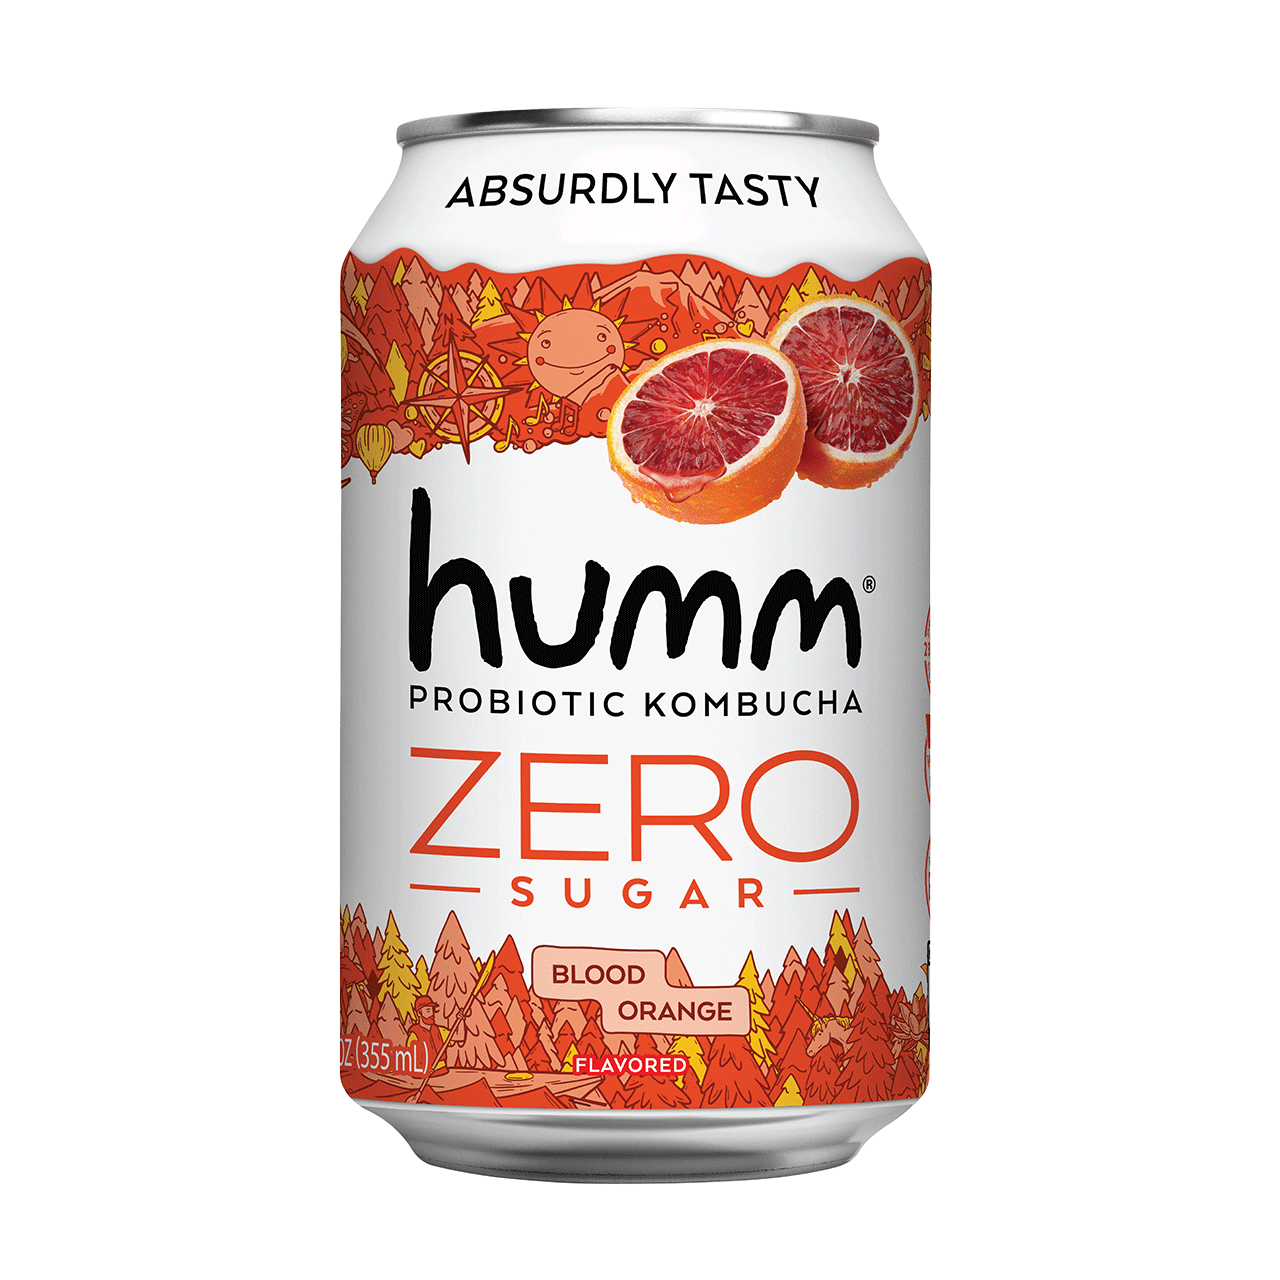 can of Blood Orange Zero Sugar Kombucha